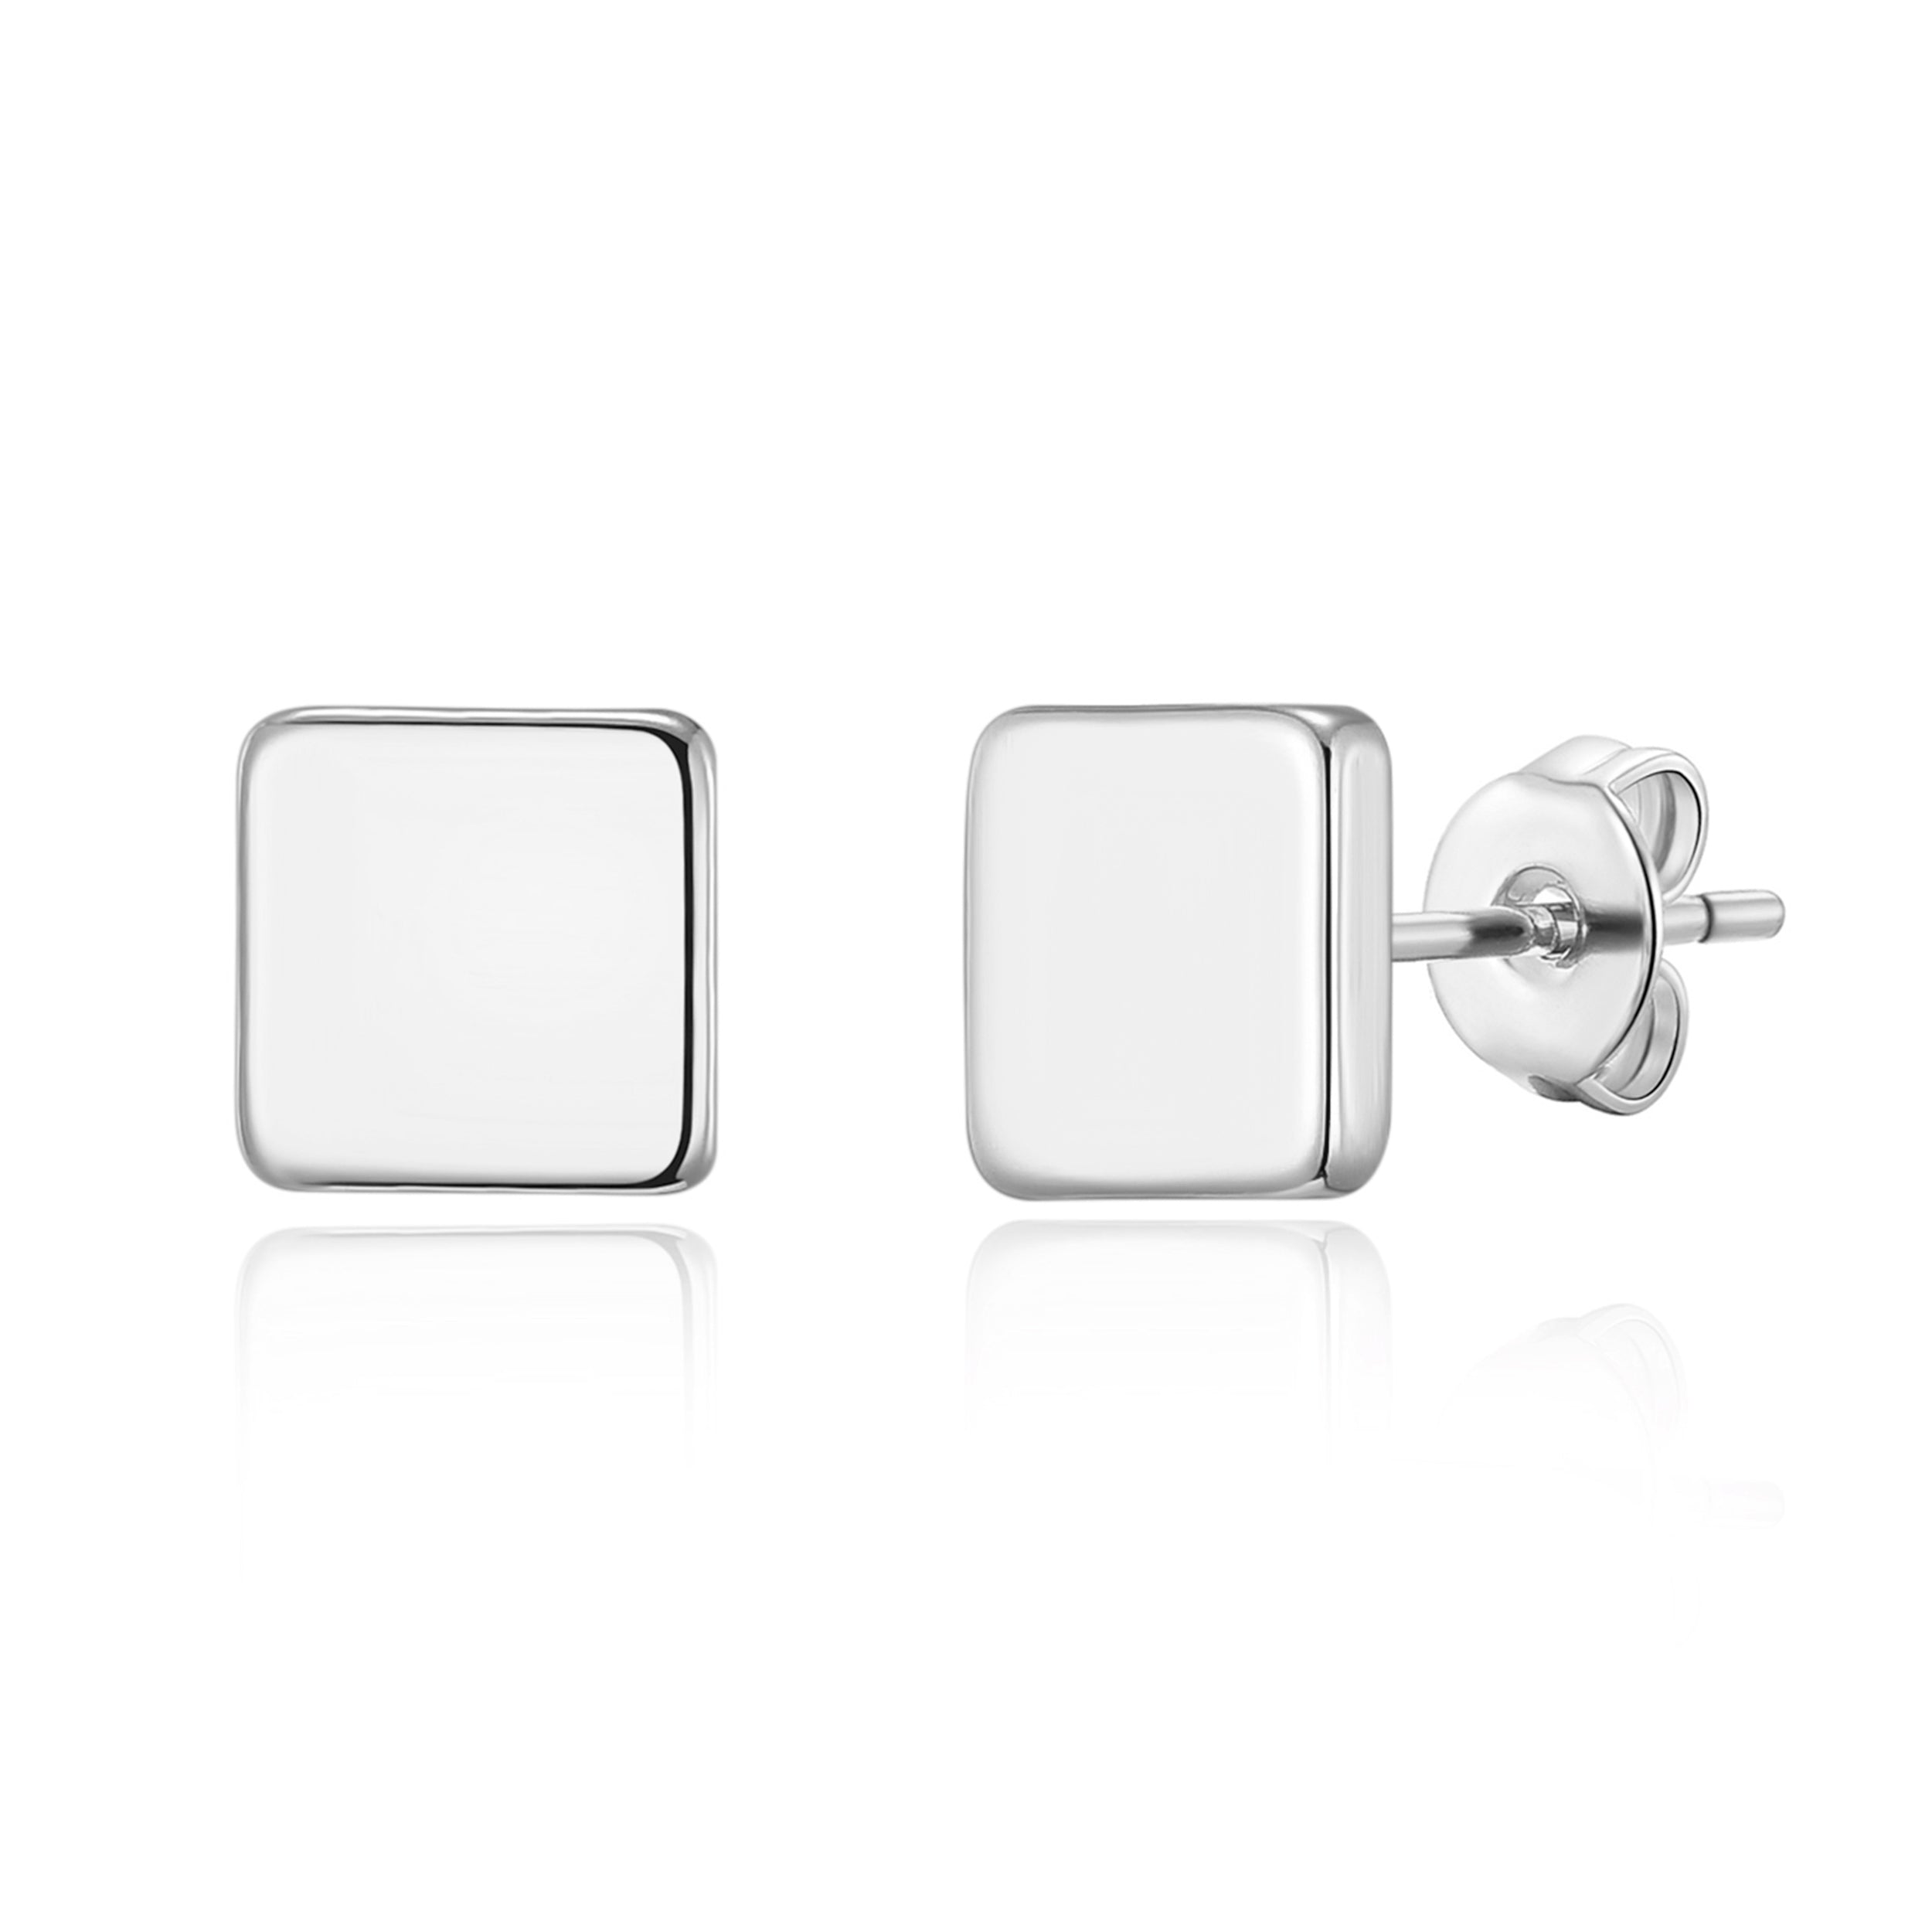 Silver Plated Square Stud Earrings by Philip Jones Jewellery